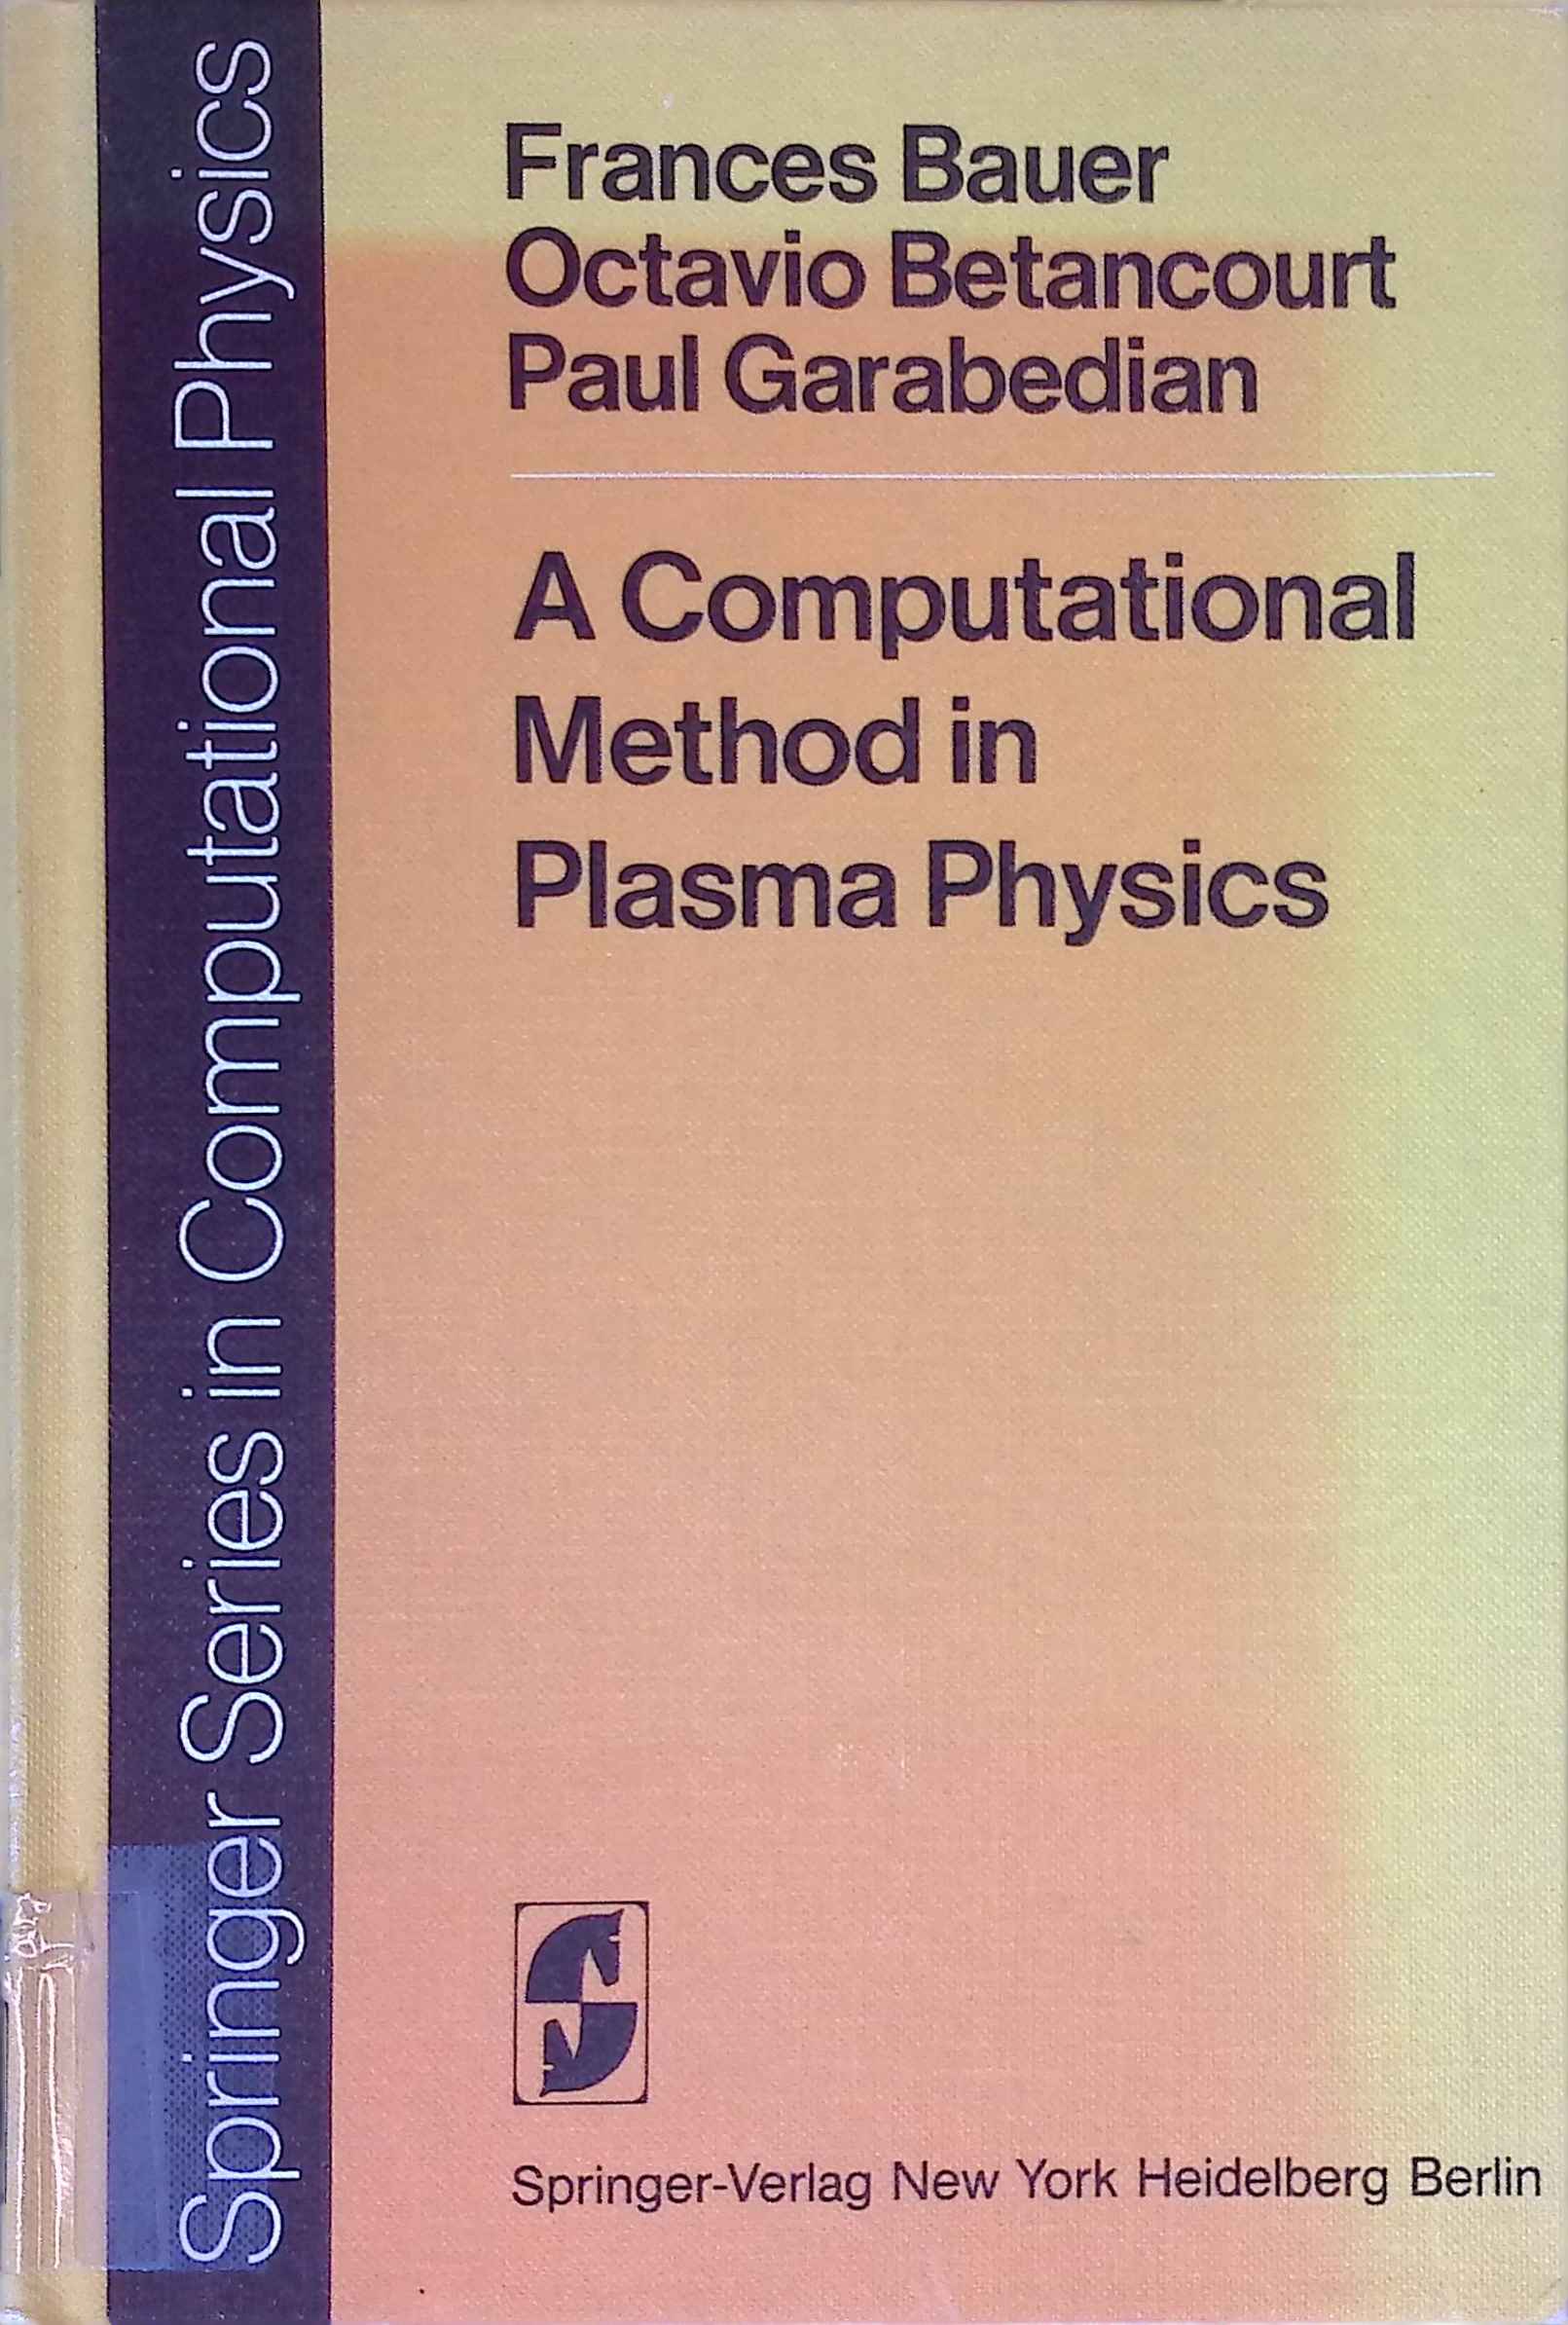 A Computational Method in Plasma Physics. Springer Series in Computational Physics. - Betancourt, O., F. Bauer and P. Garabedian